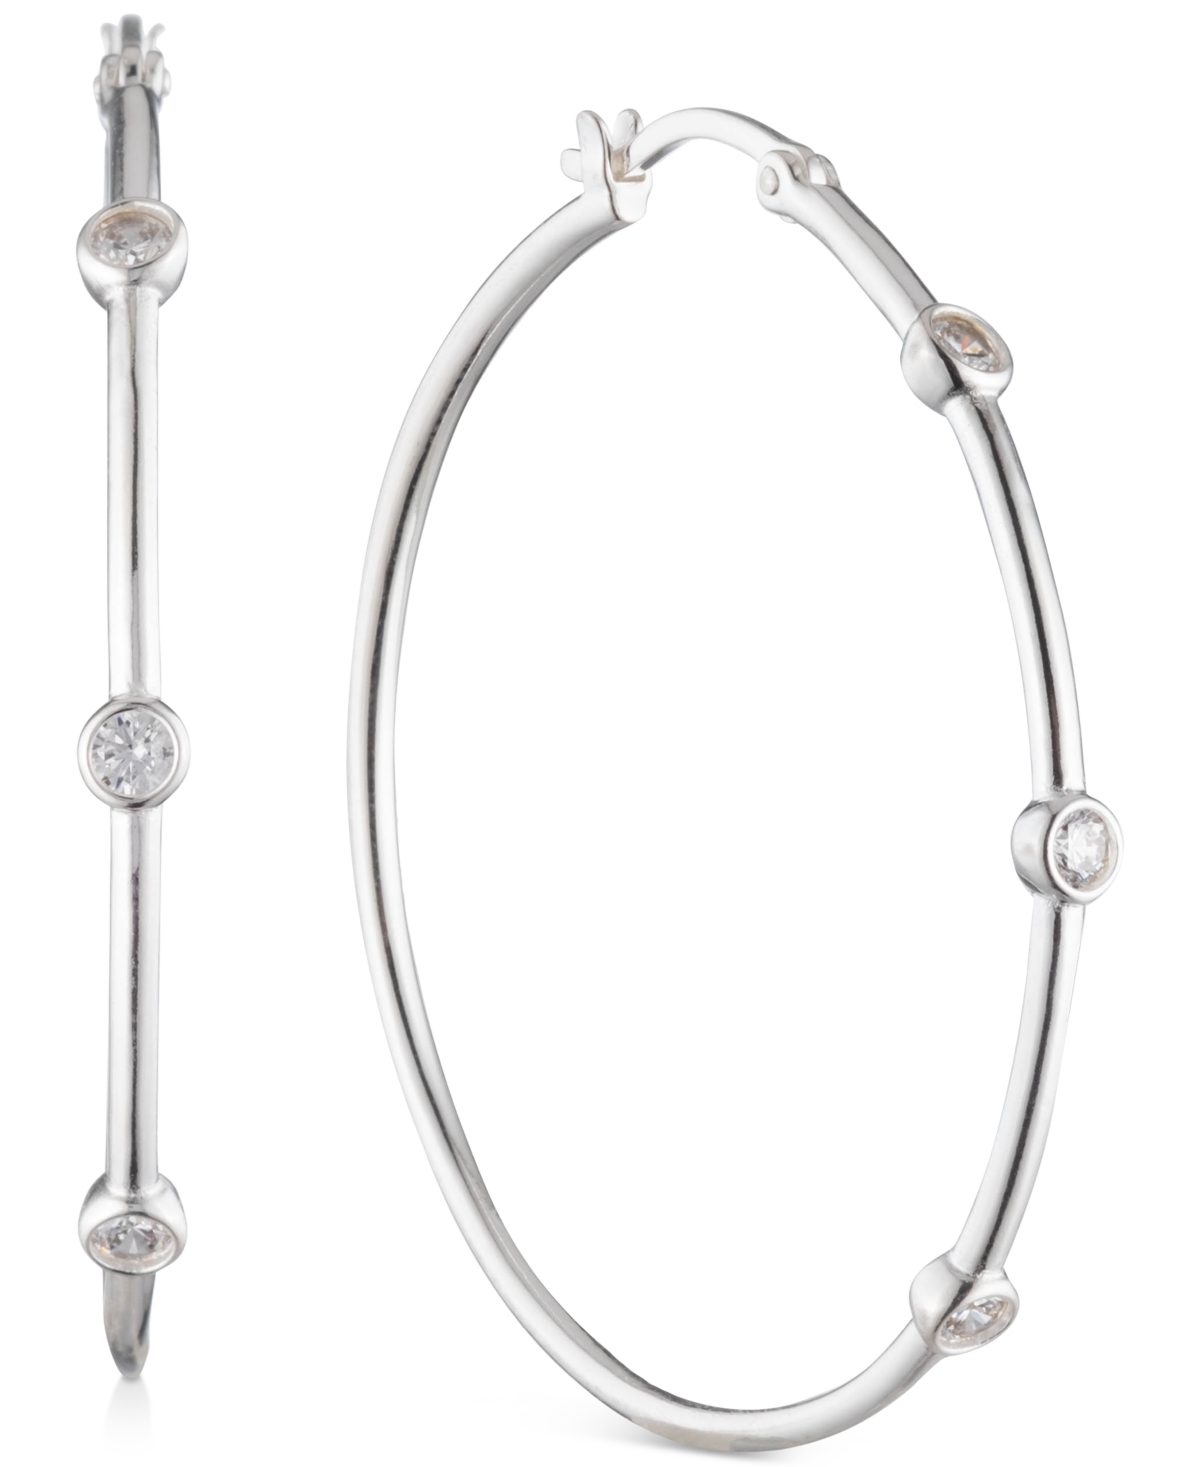 Lauren Ralph Lauren Crystal Small Hoop Earrings in Sterling Silver, 0.8" - Silver